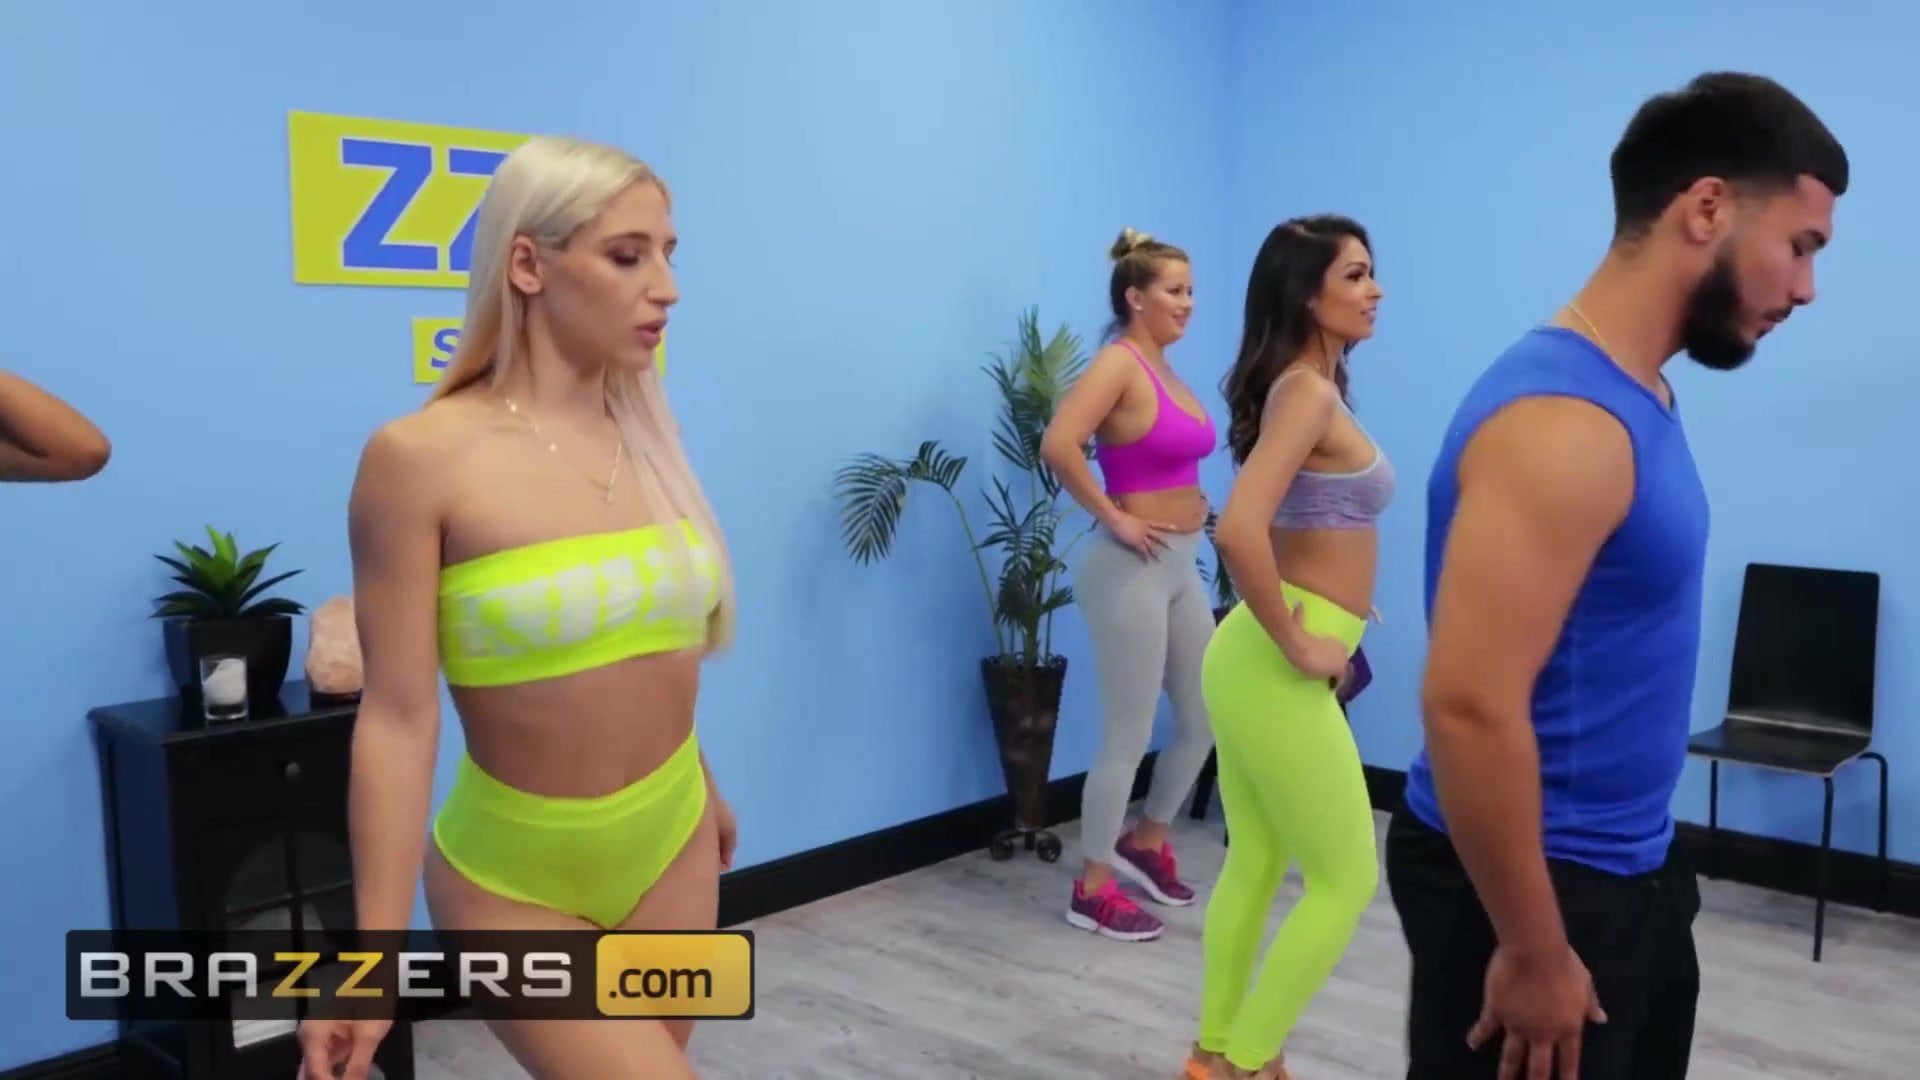 Brazzers studio dancers start an unreal (lesbian) dance in gym